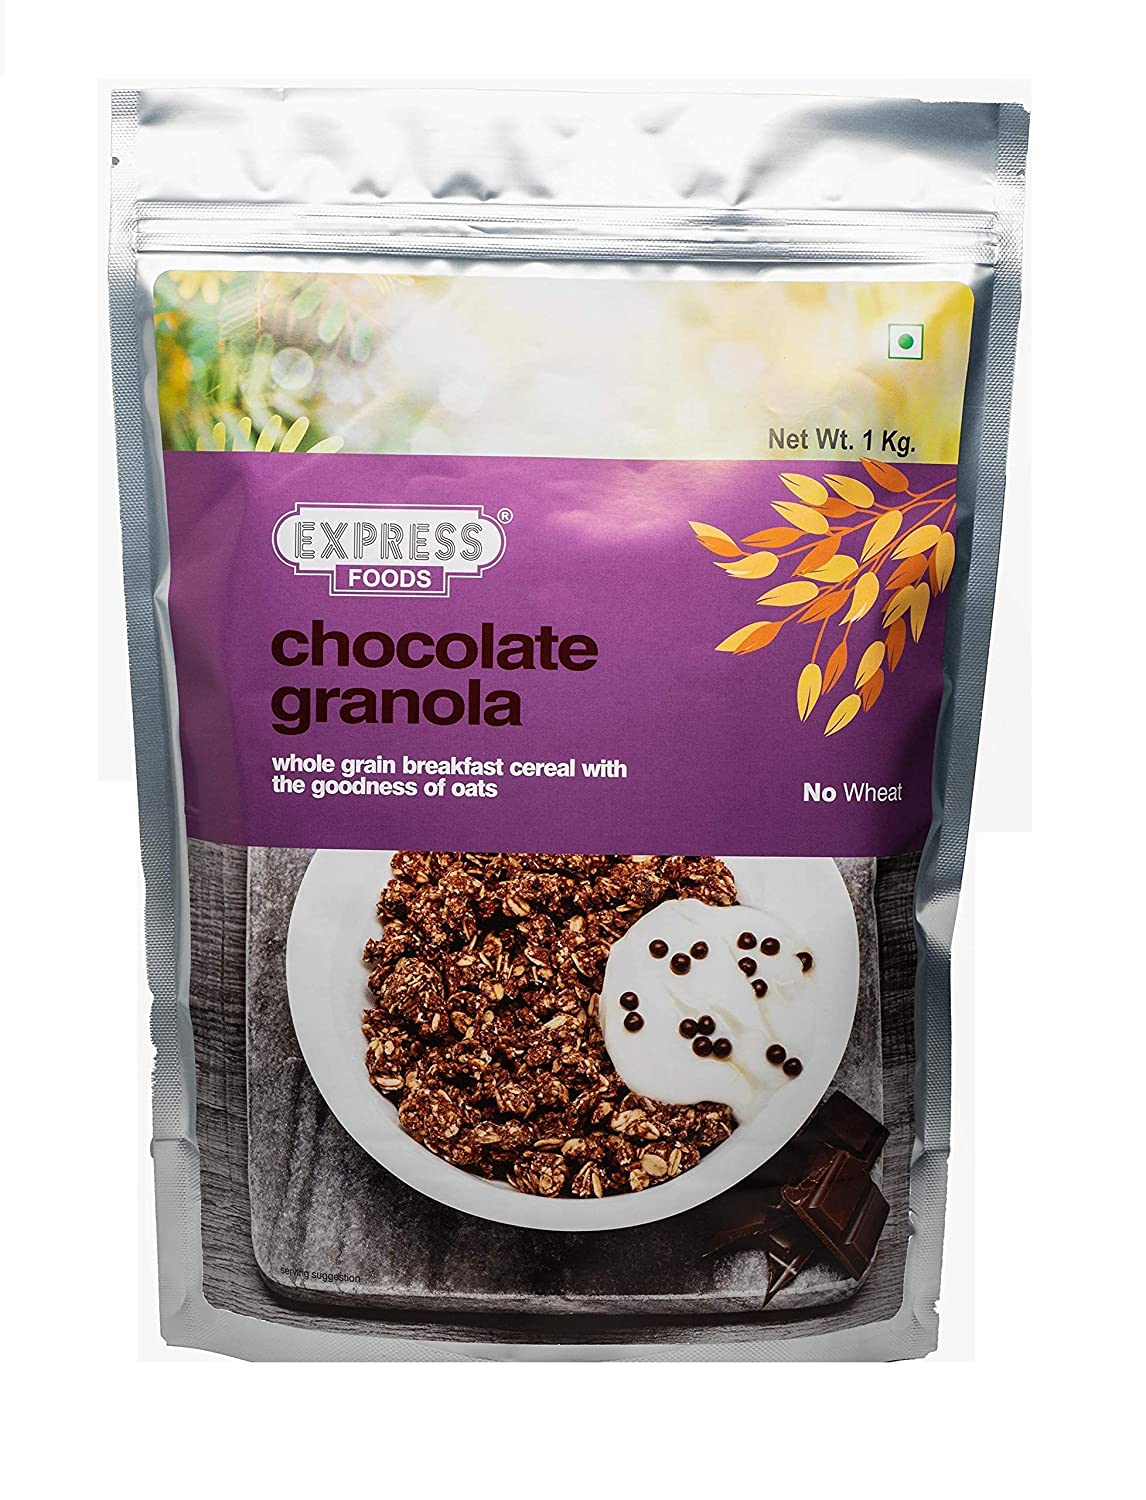 Express Foods Chocolate Granola Image